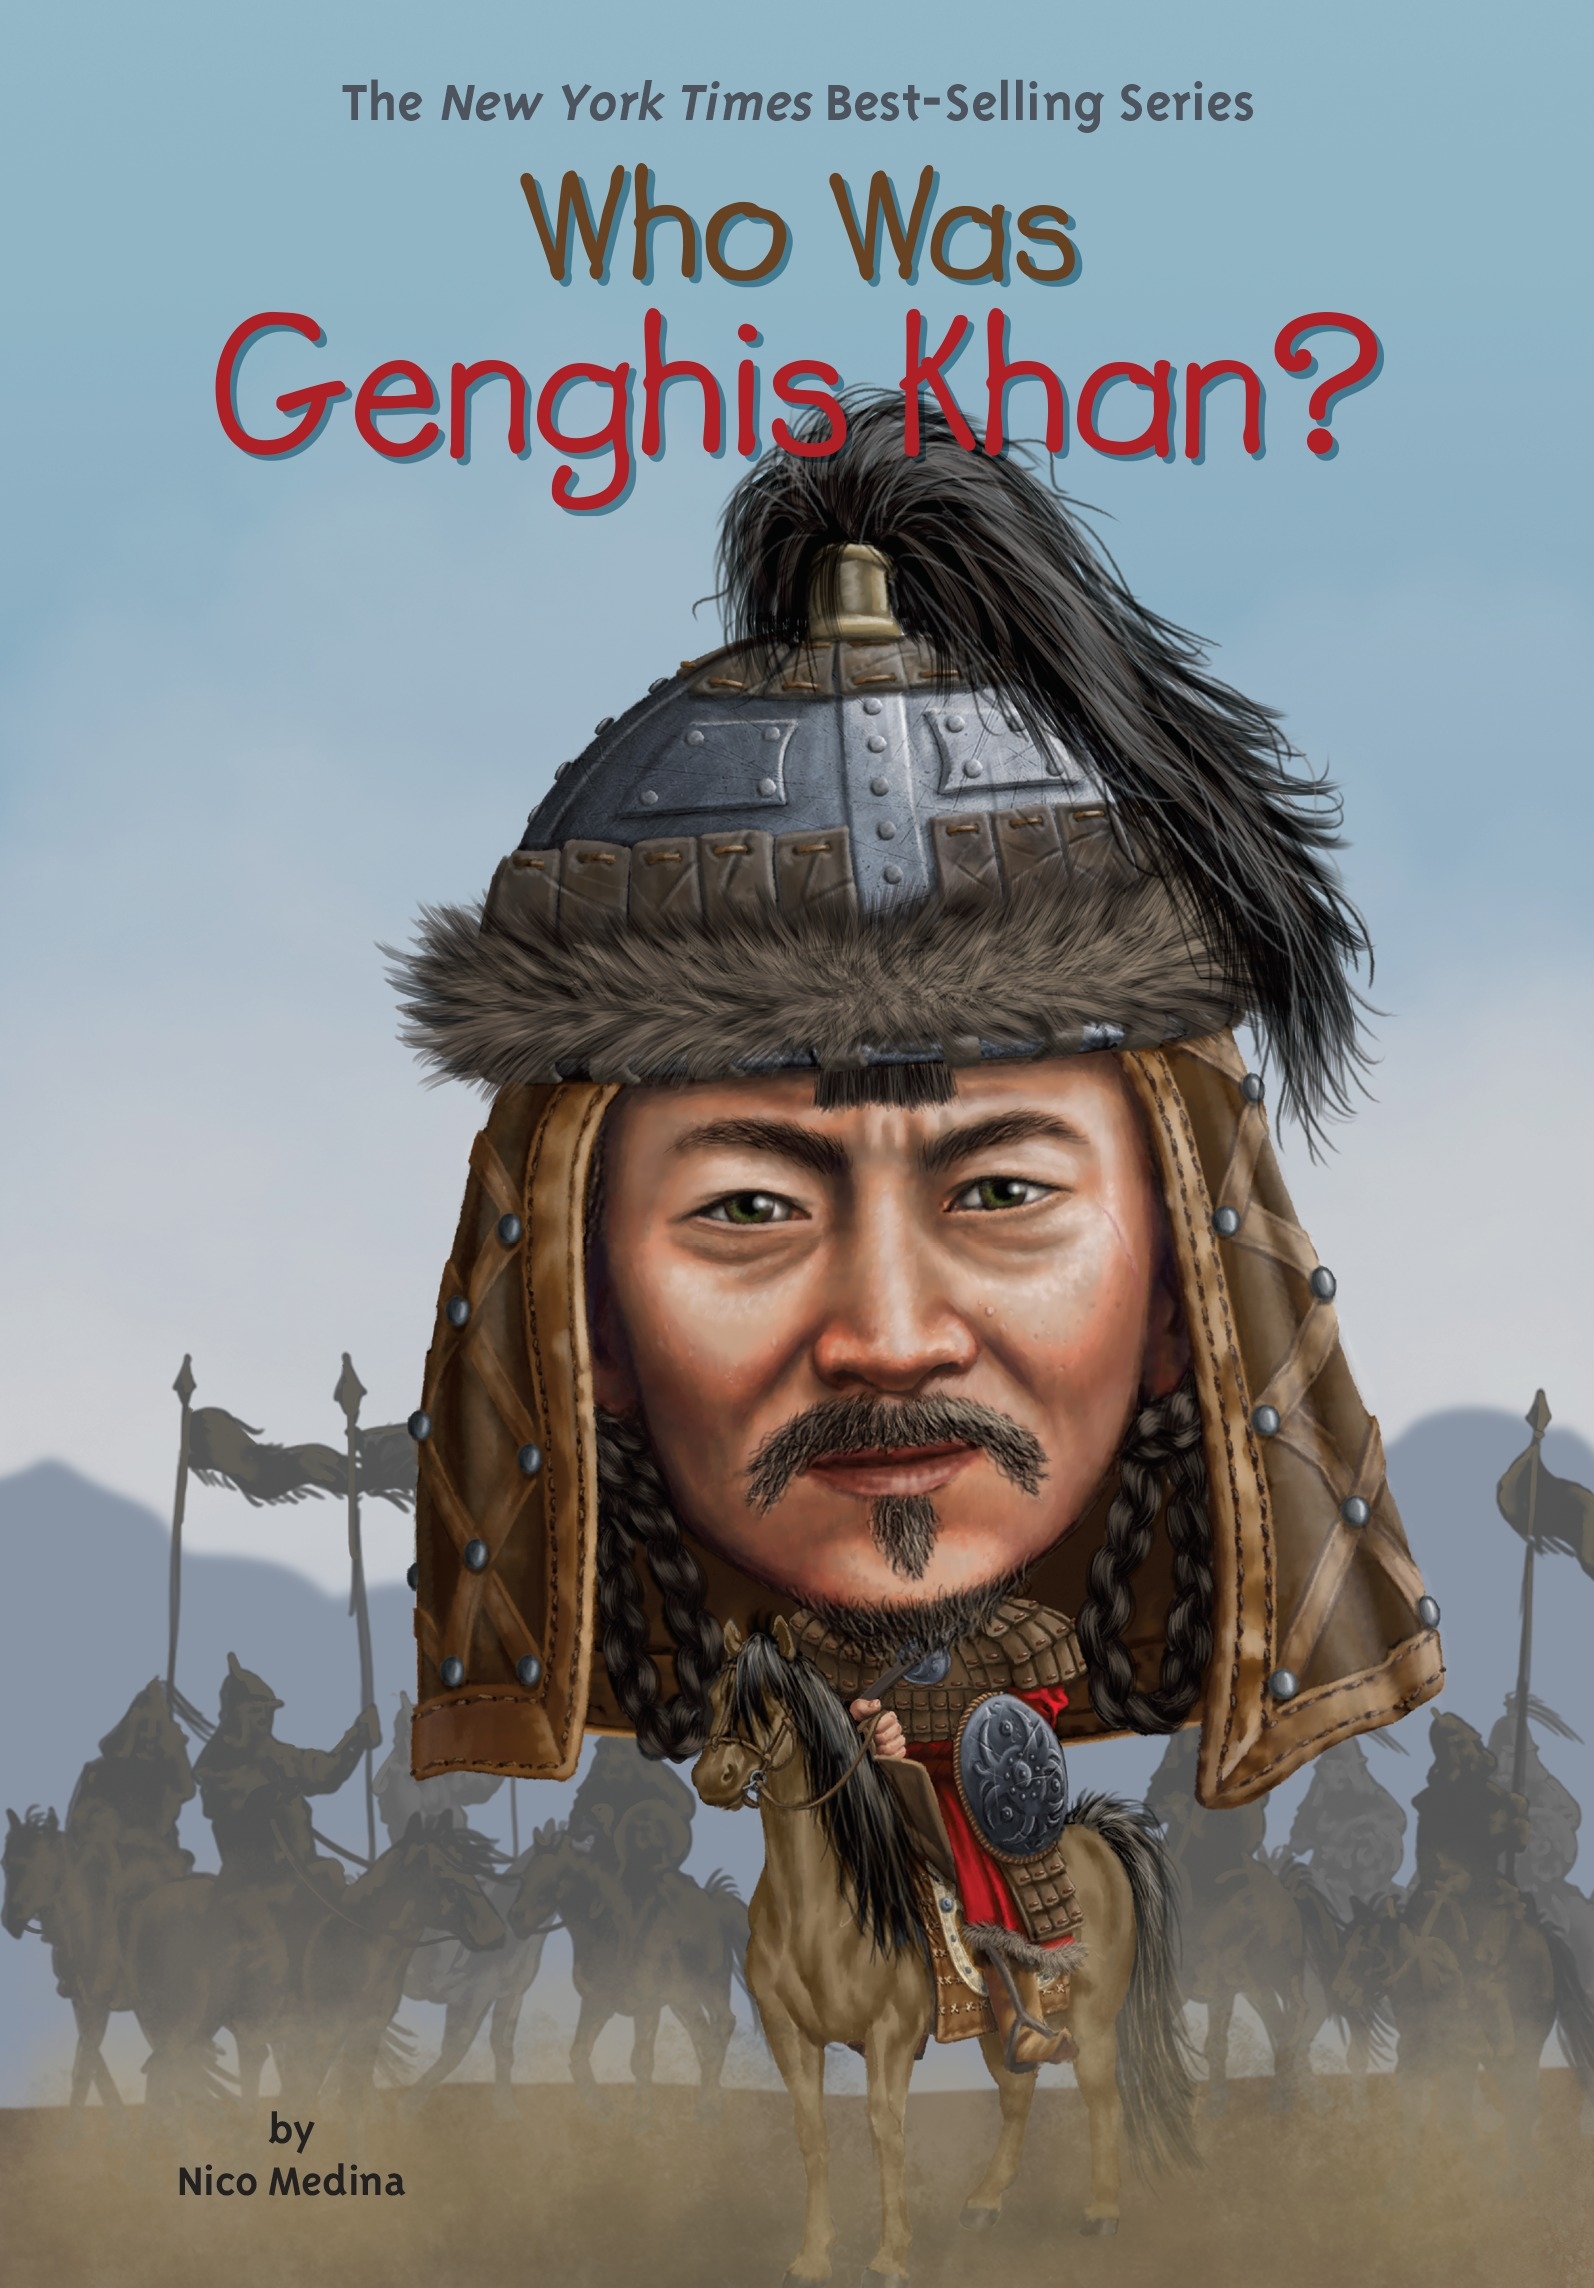 shan yu genghis khan